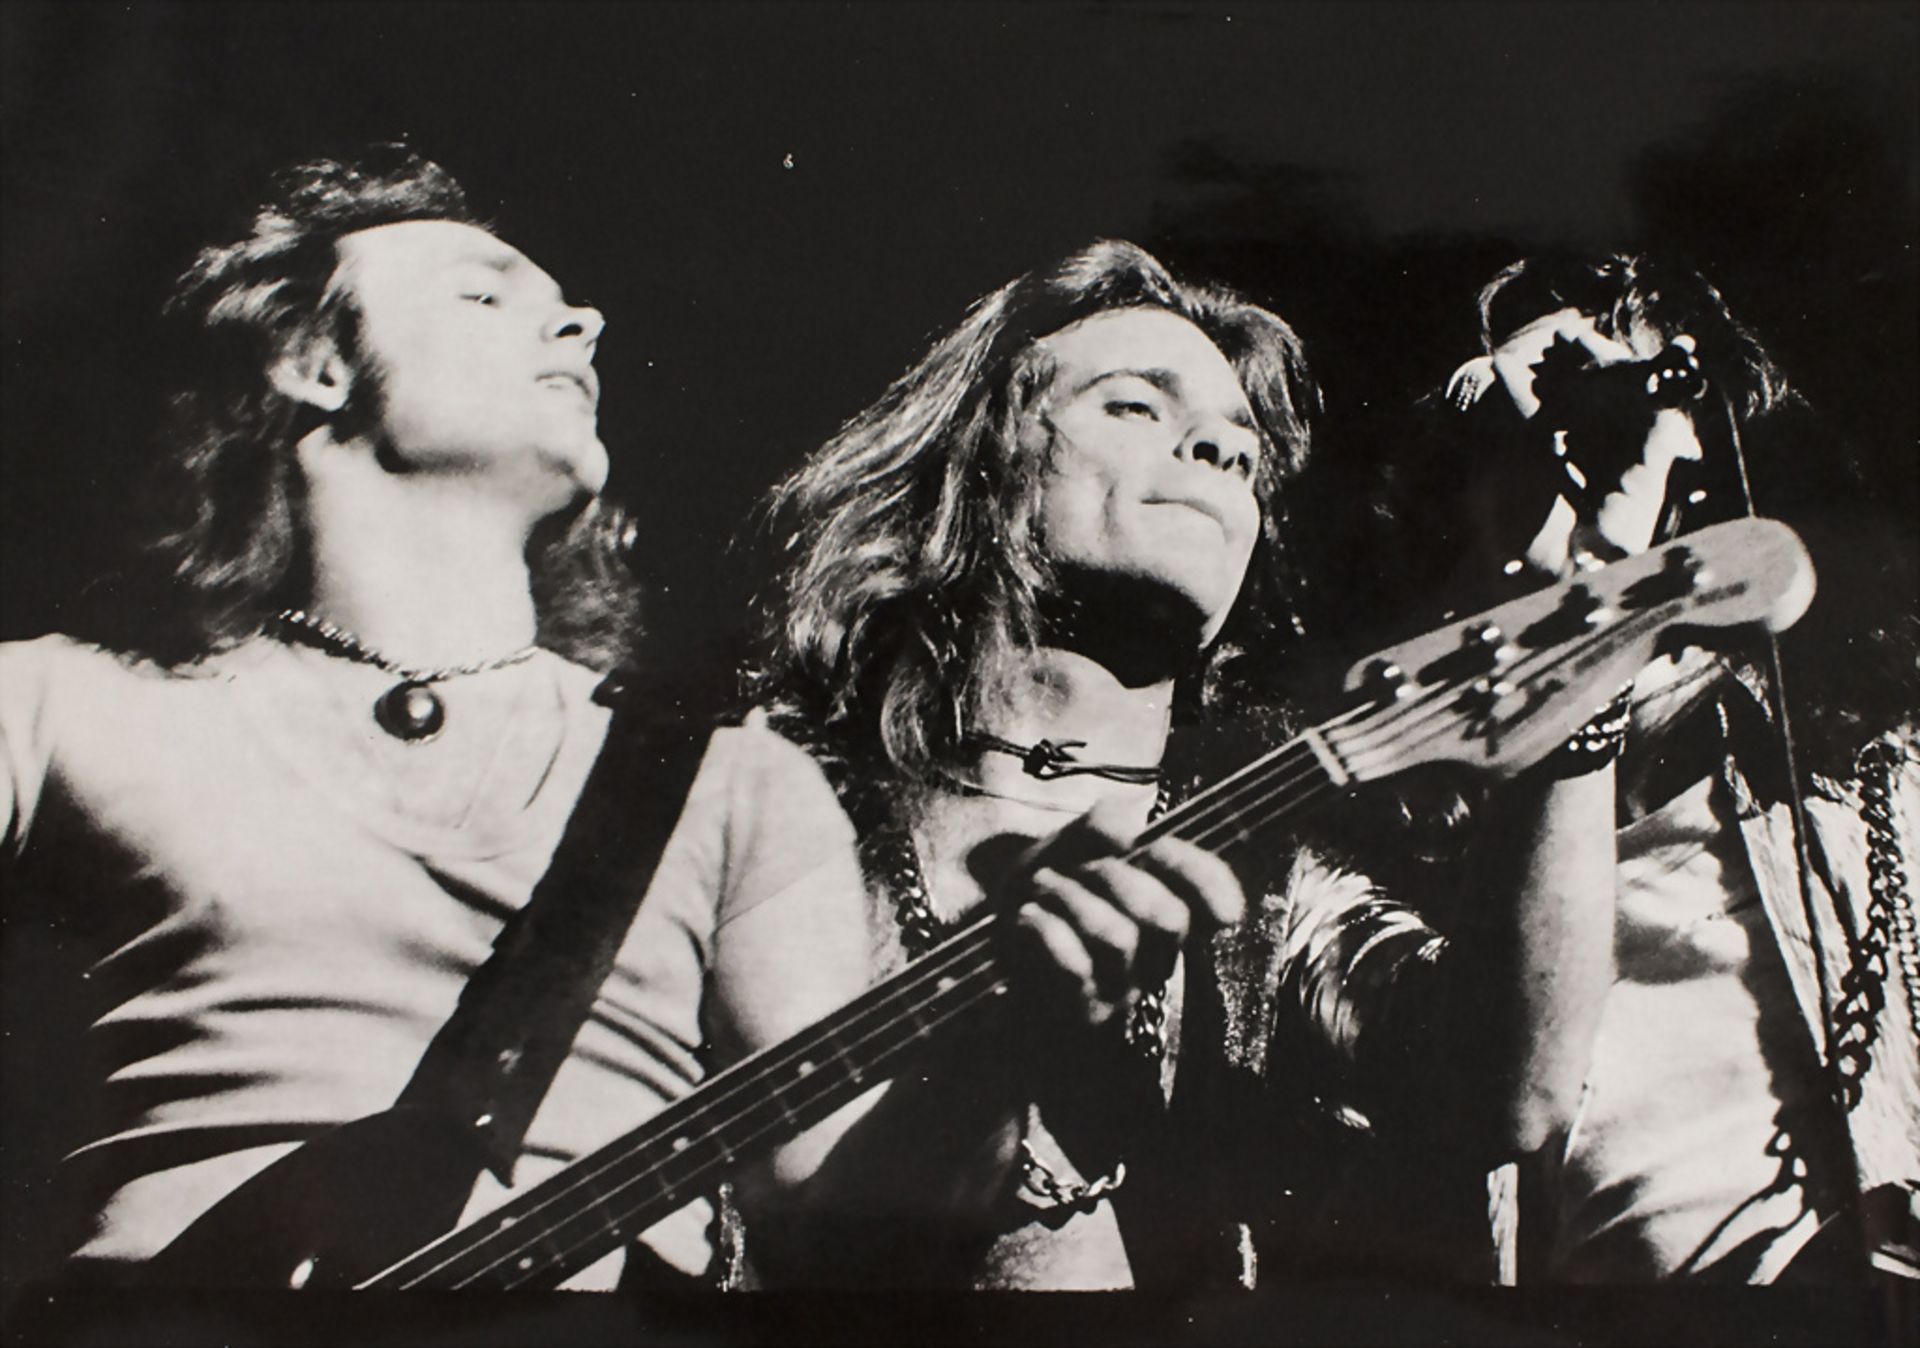 Konzertfoto der Rockband Van Halen / A concert photograph of Van Halen, 1970er Jahre